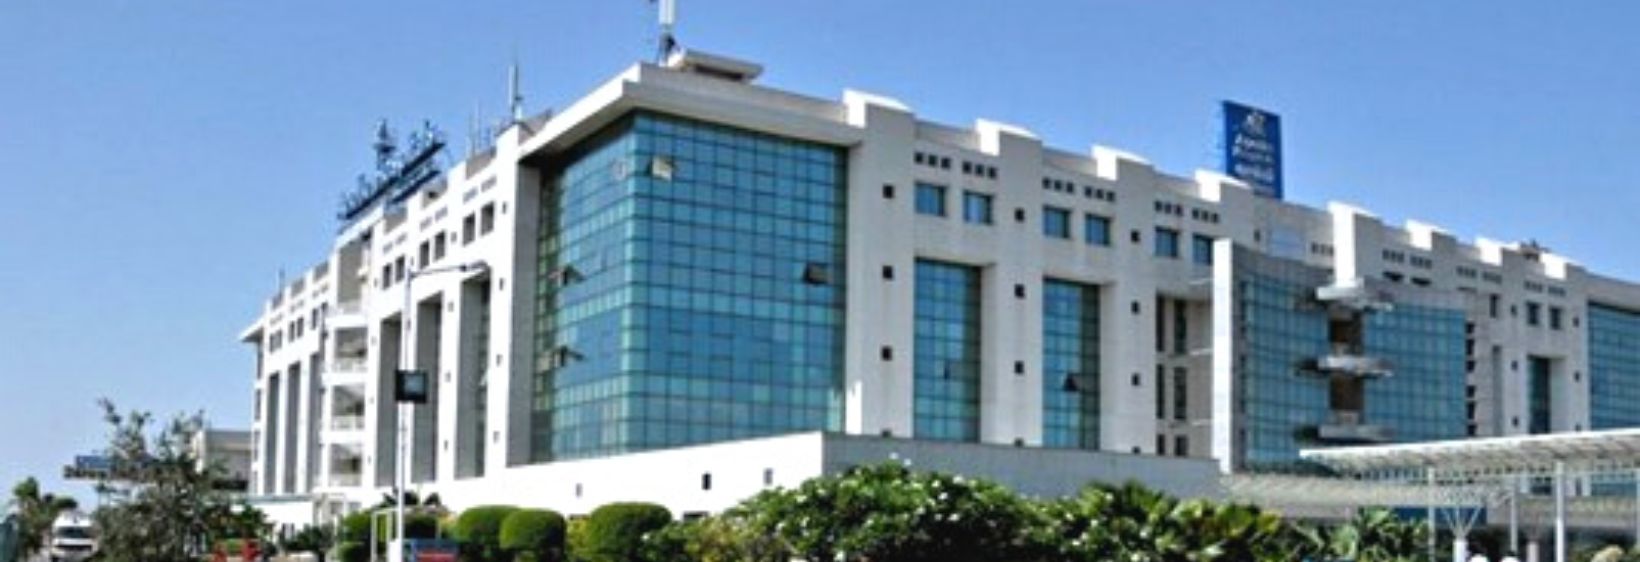 Appolo Hospitals International Limited College of Nursing - Ahmedabad